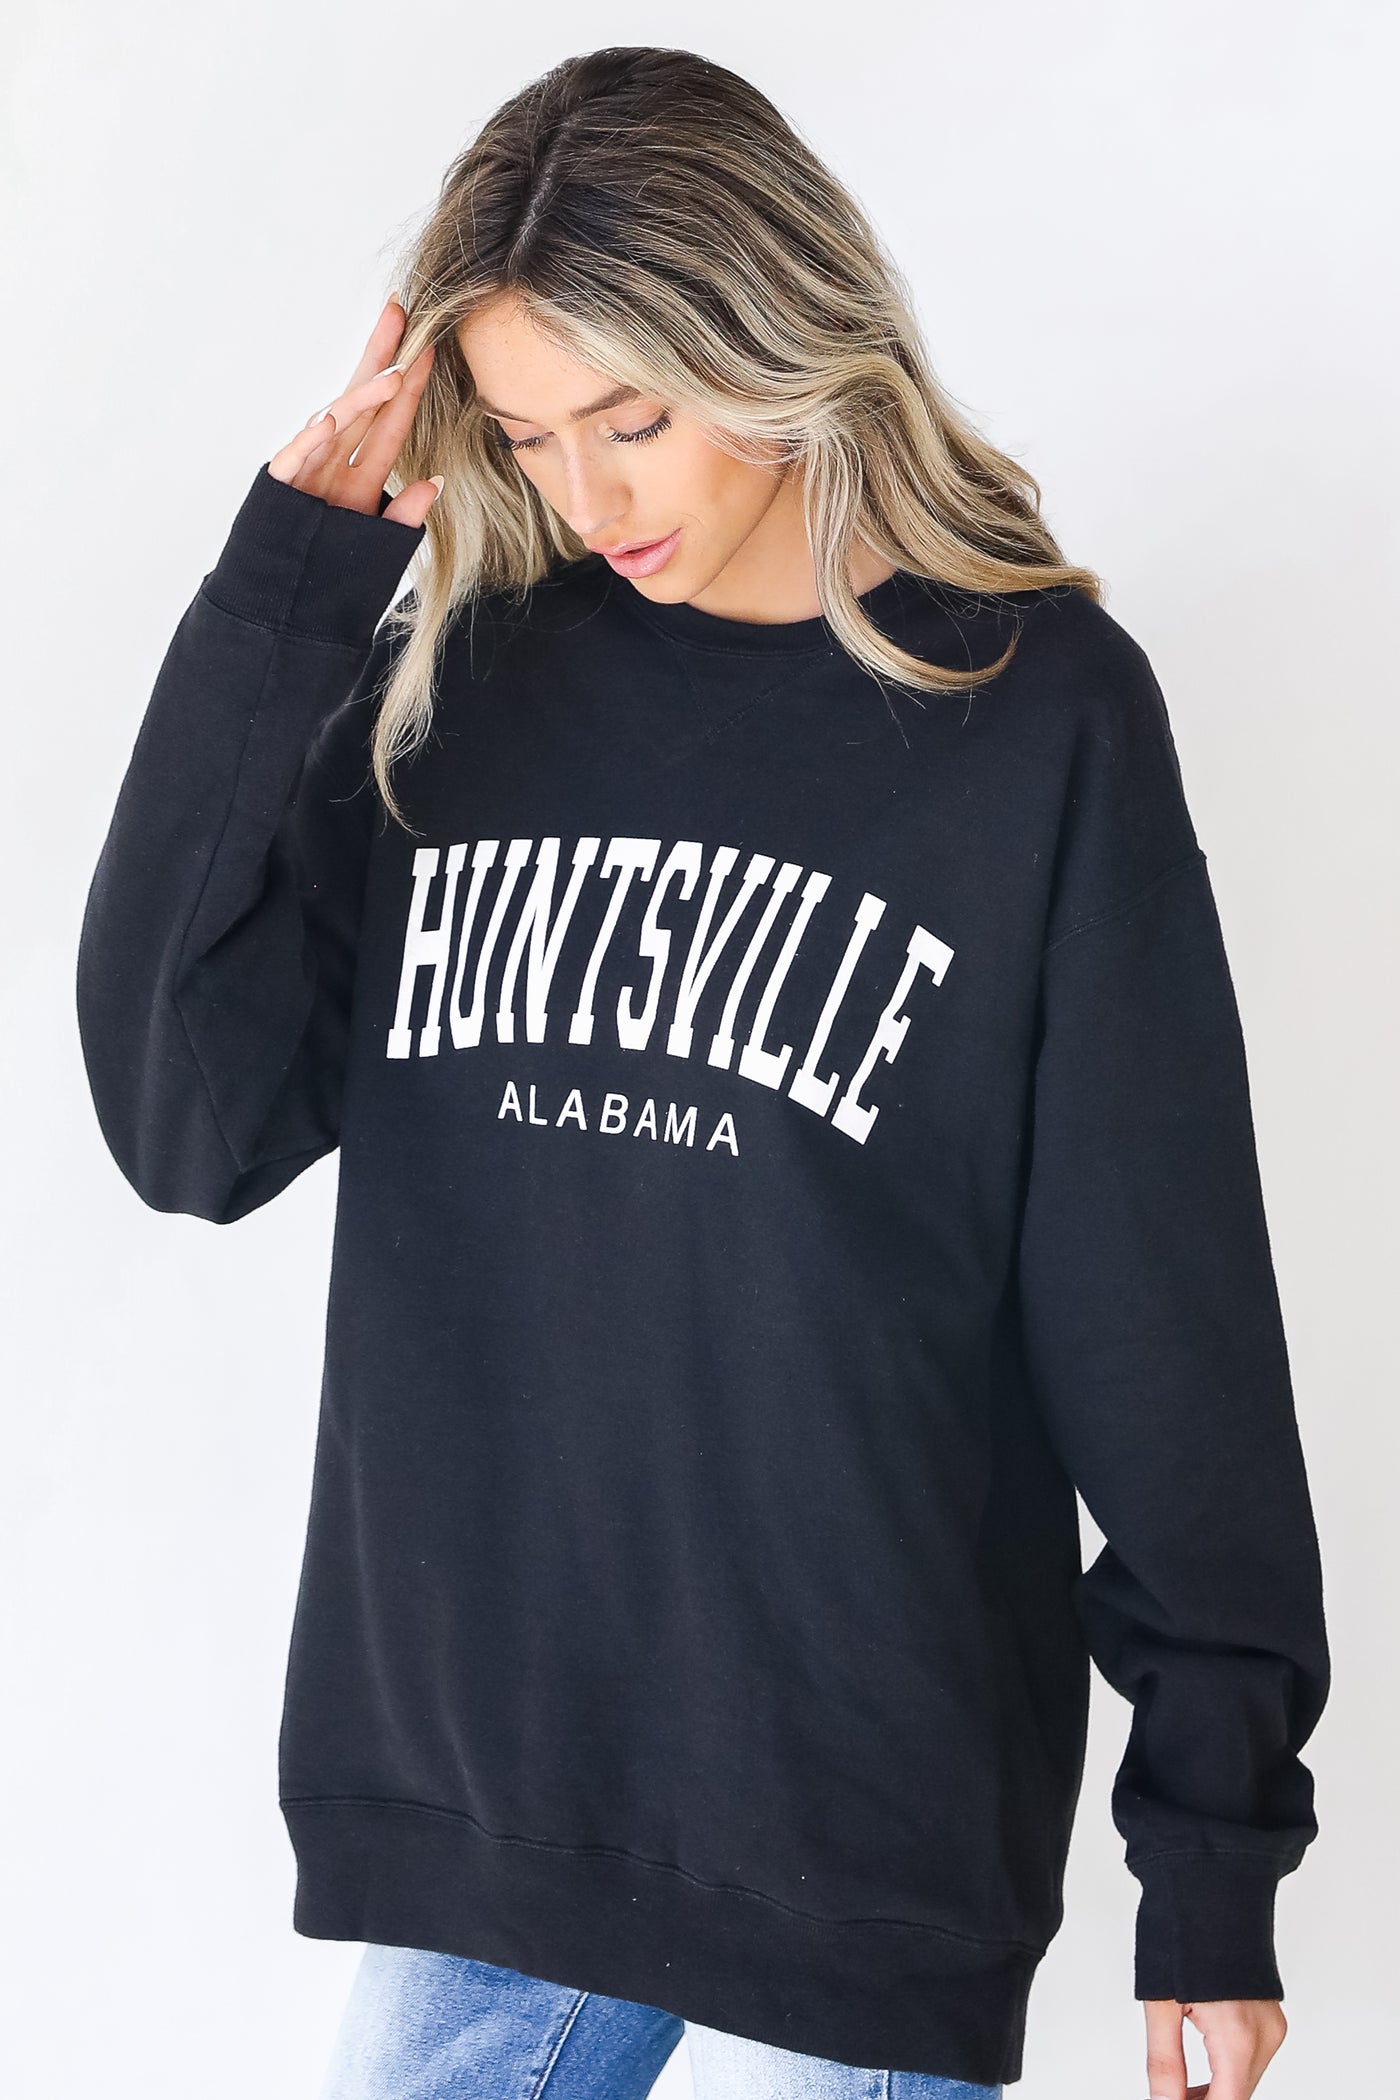 Huntsville Alabama Pullover. Graphic sweatshirt, alabama sweatshirt, comfy, oversized